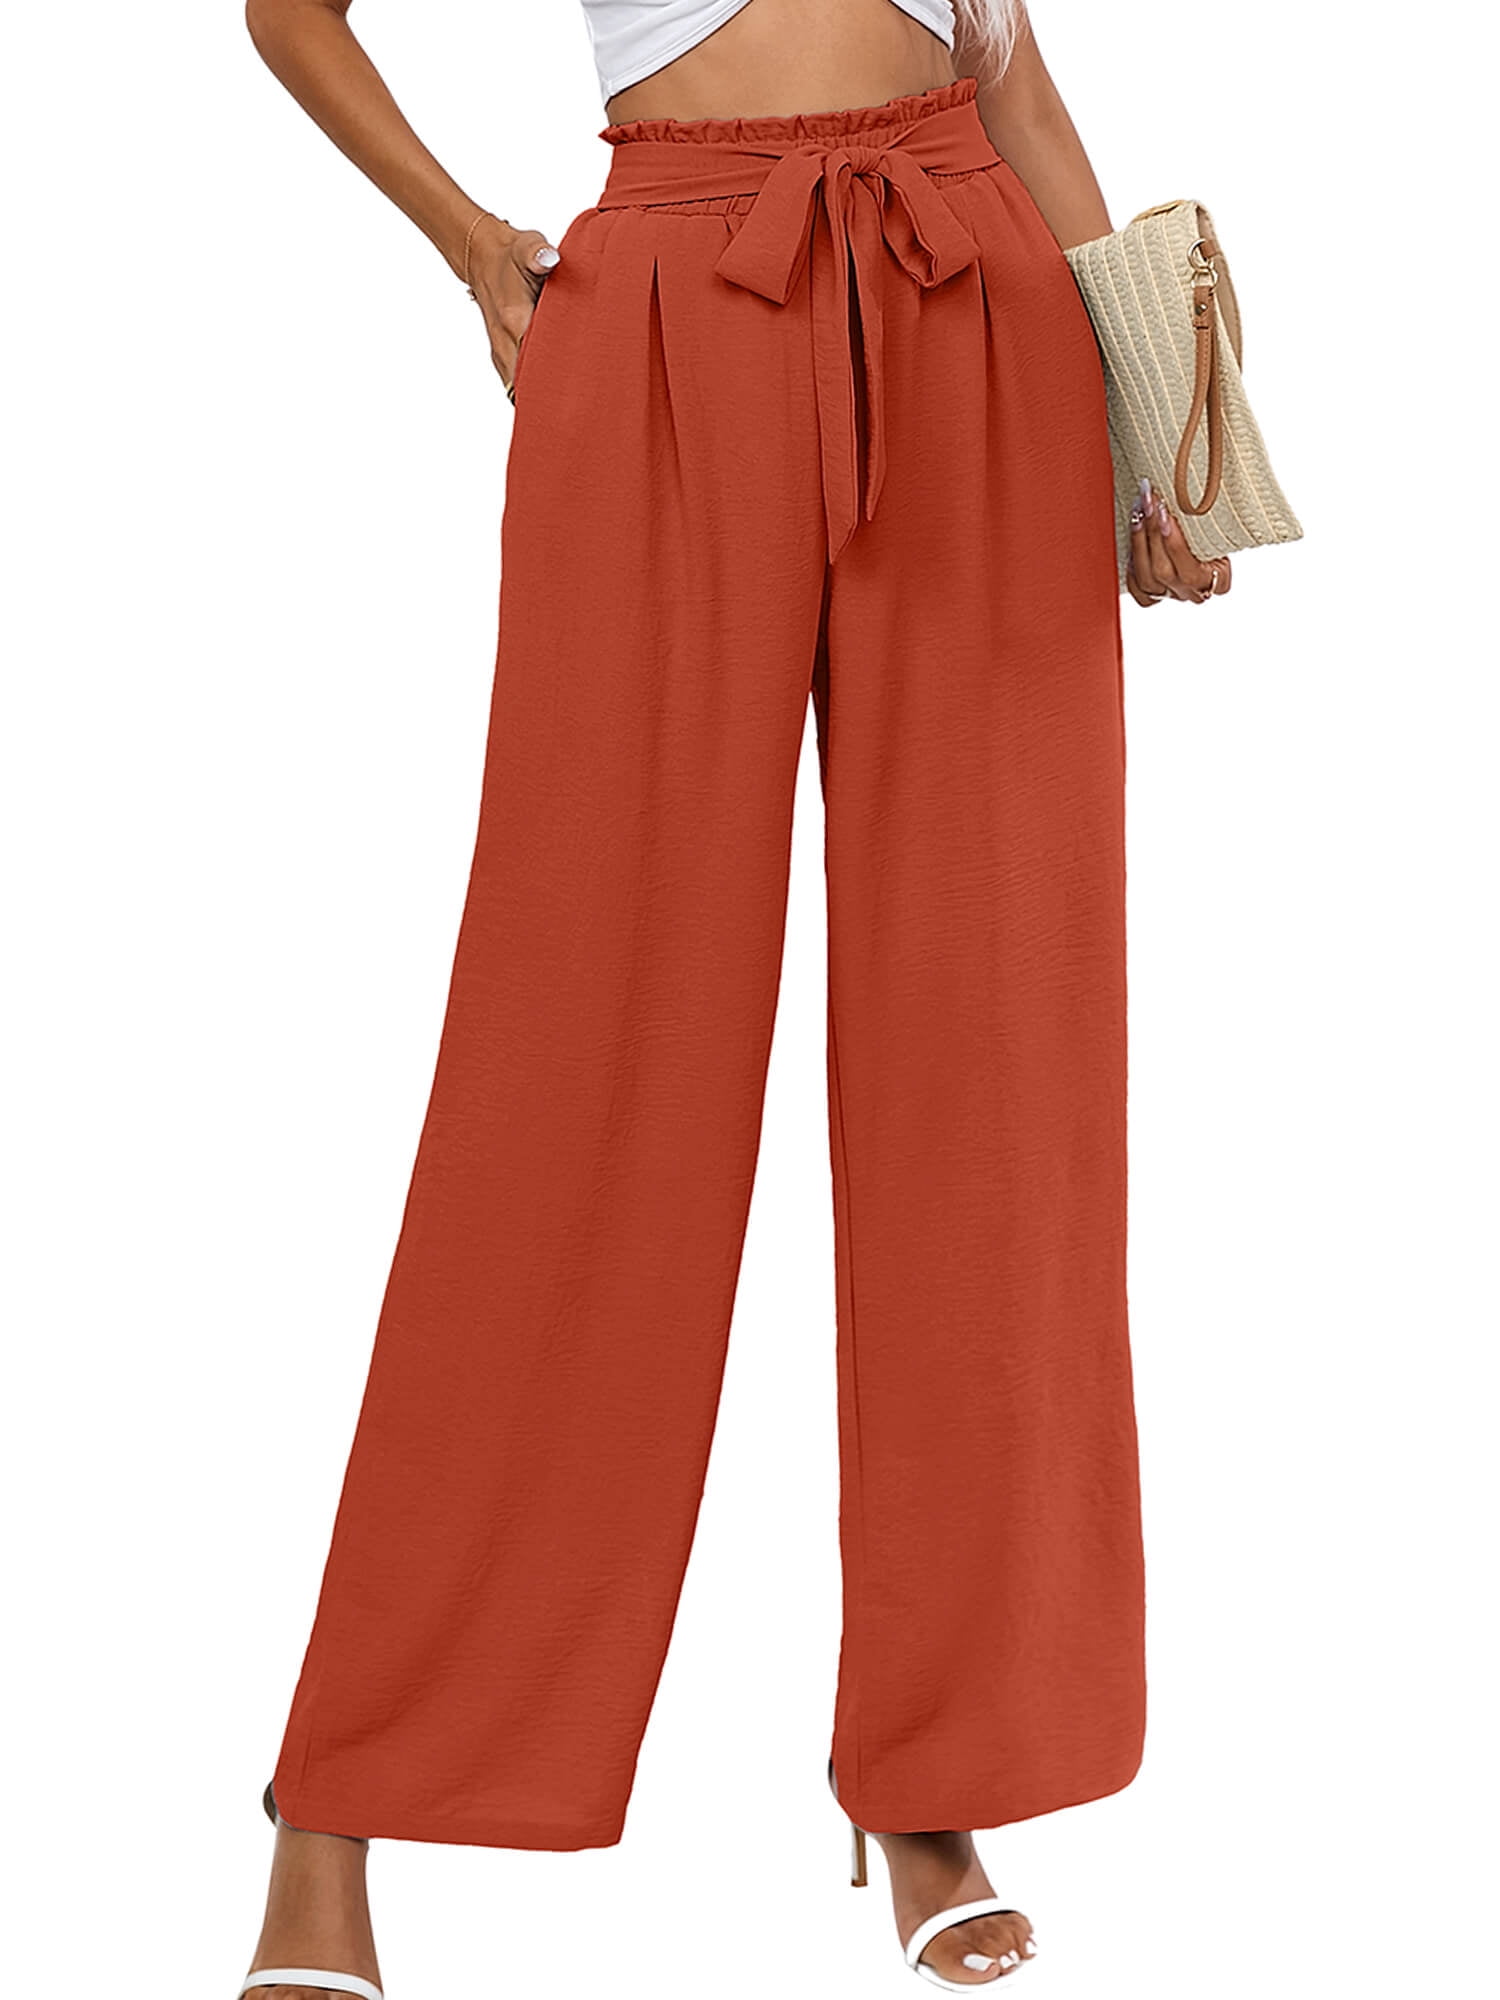 Buy Women trouser casual pants for women pista color Online at